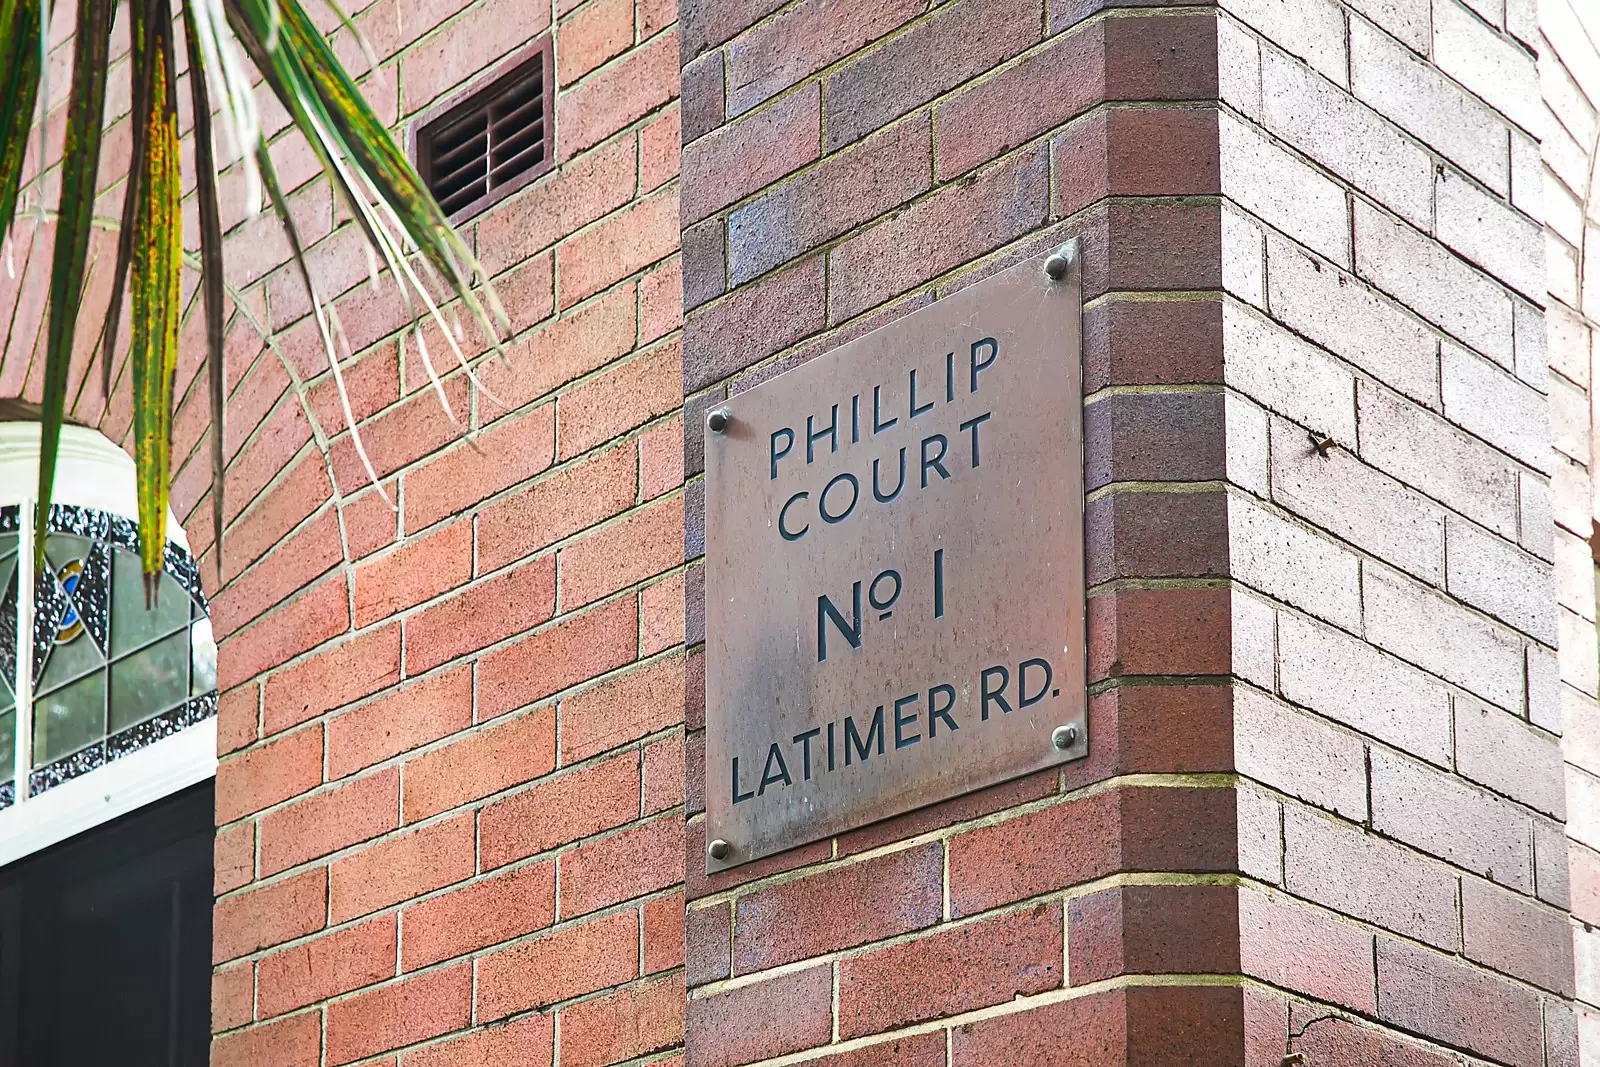 1/1 Latimer Road, Bellevue Hill Sold by Sydney Sotheby's International Realty - image 9